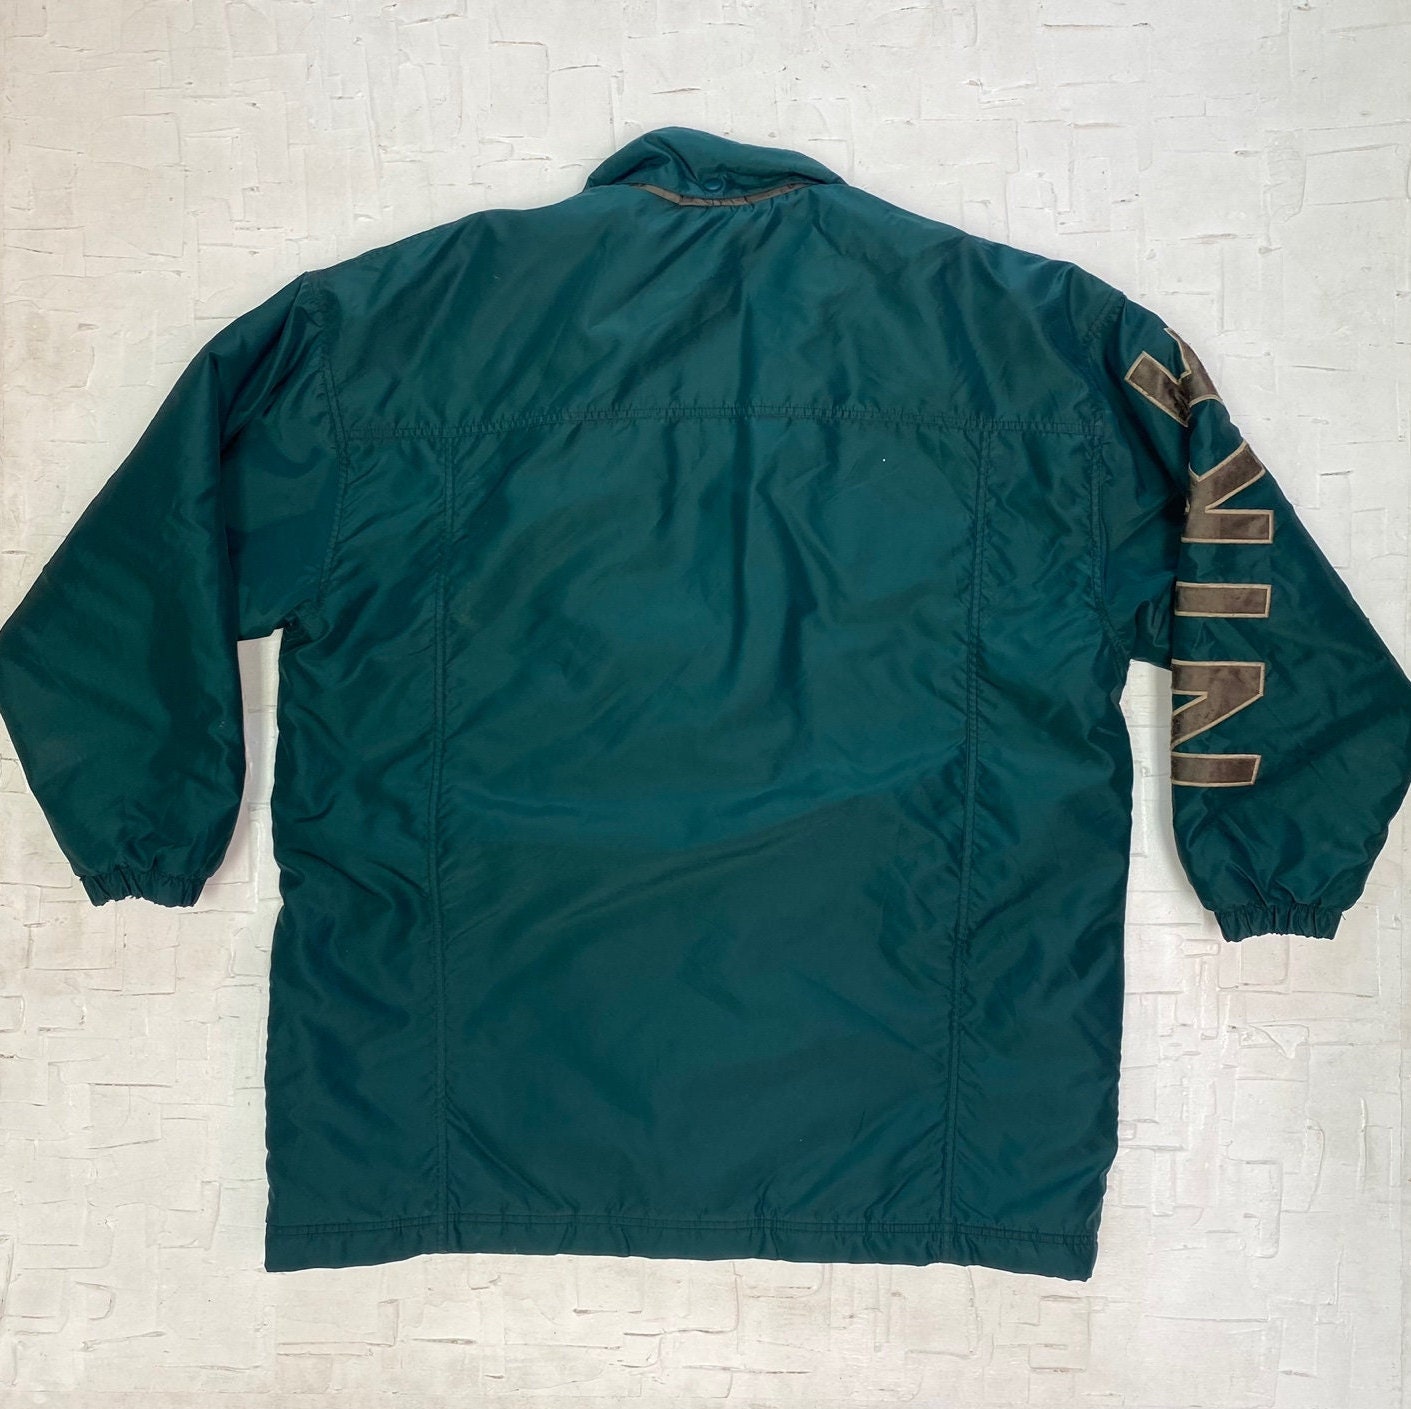 Vintage Teal and Brown Nike Ski-Jacket with Large Logo on Sleeve | Vintage Jacket | Nike | Quilt Lining | Winter | Men's Size L | M-2044